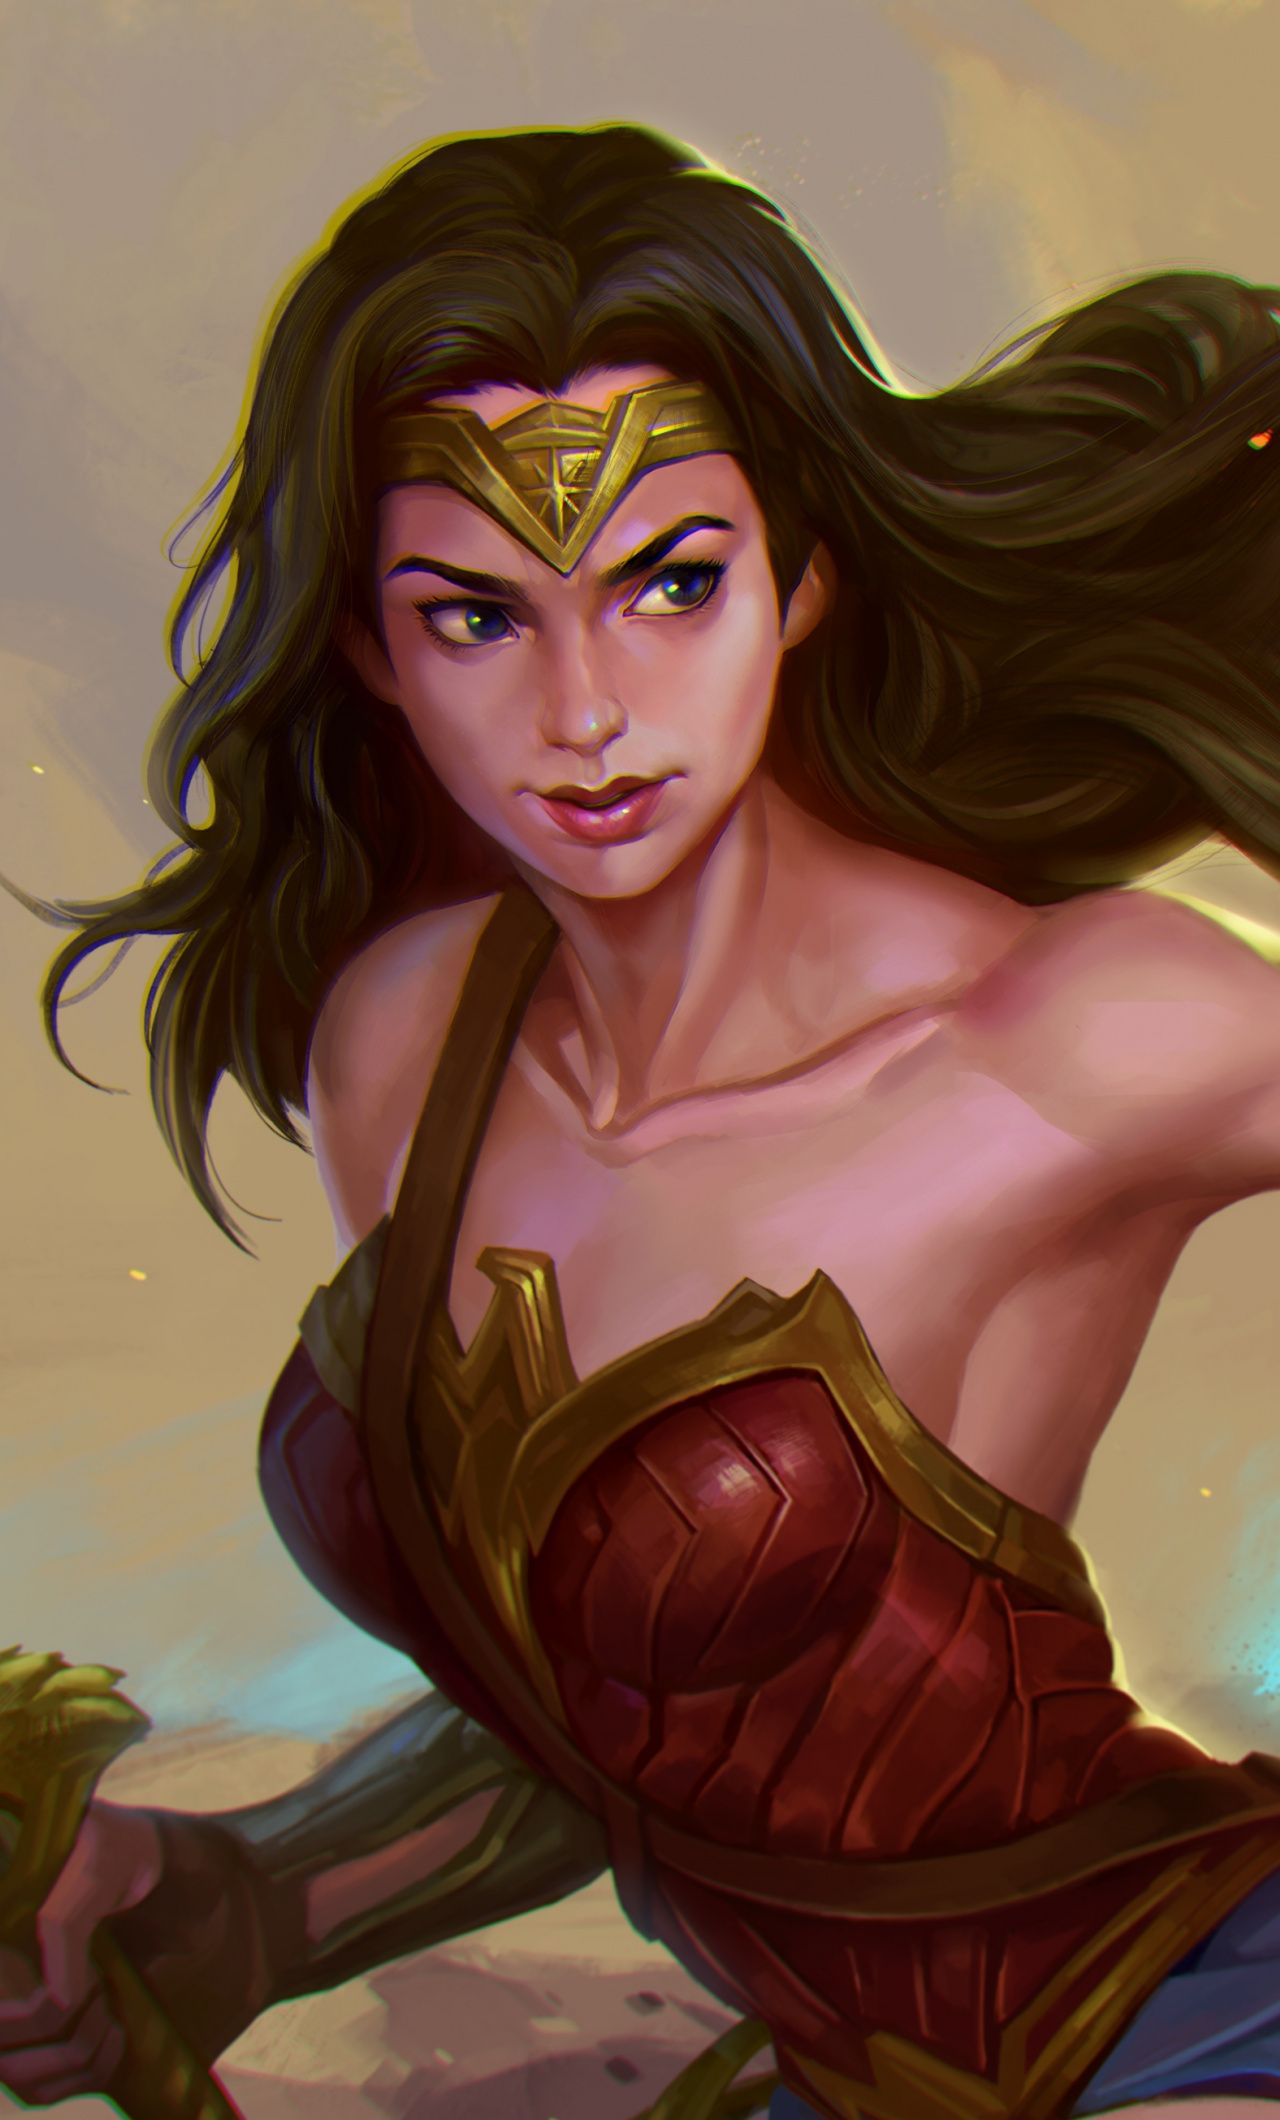 Download Superhero, princess Diana, dc comics, wonder woman wallpaper, 1280x2120, iPhone 6 Plus